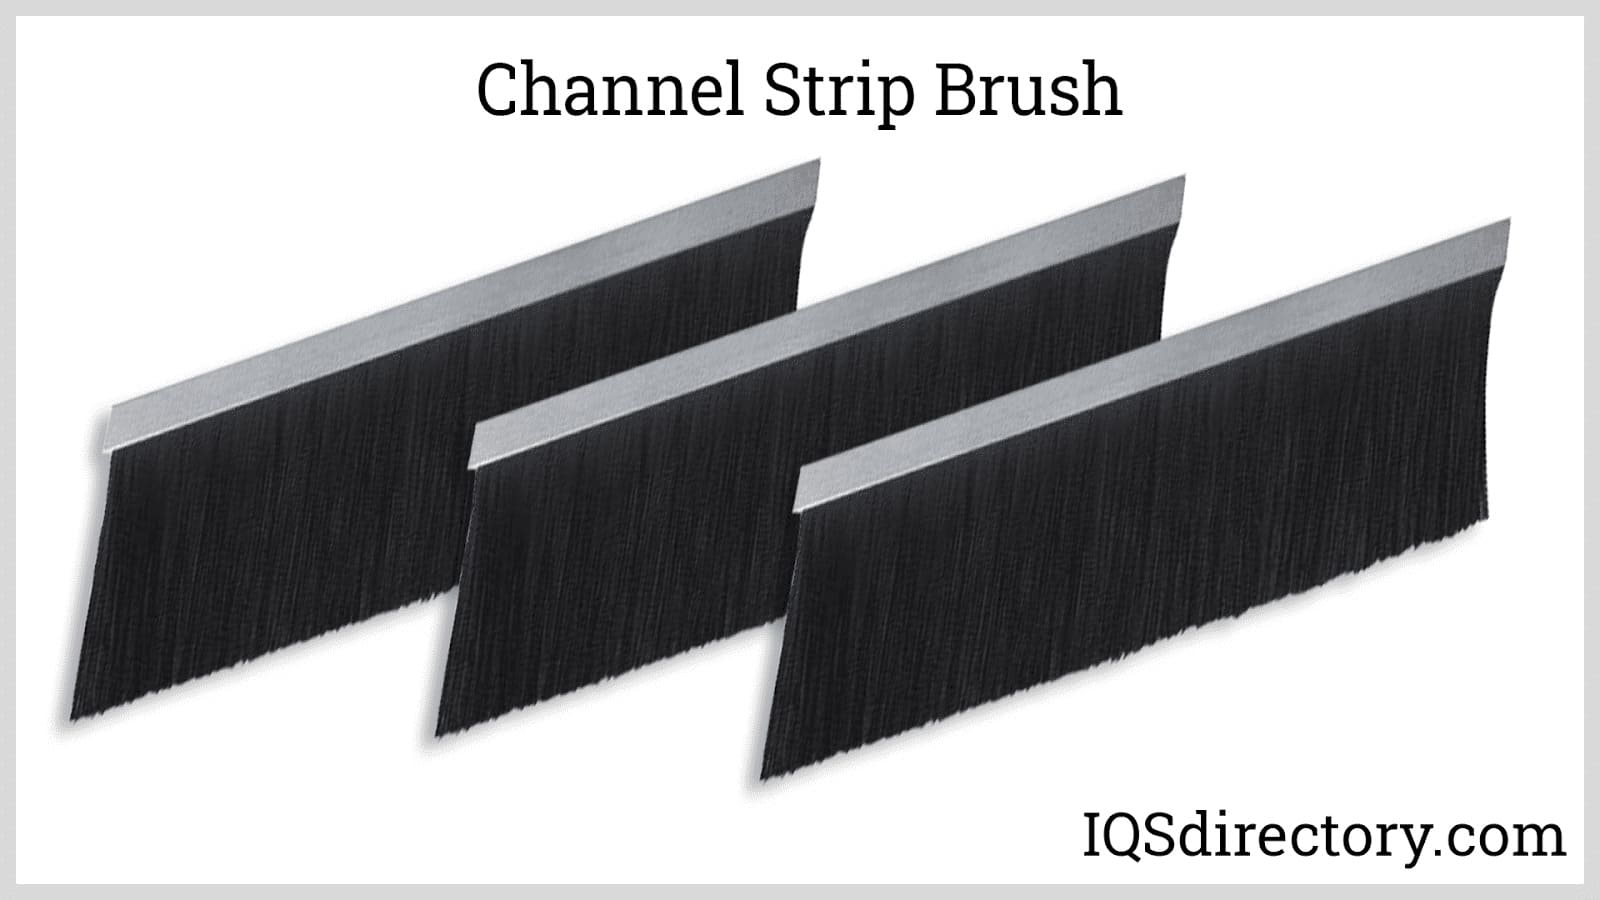 Channel Strip Brush